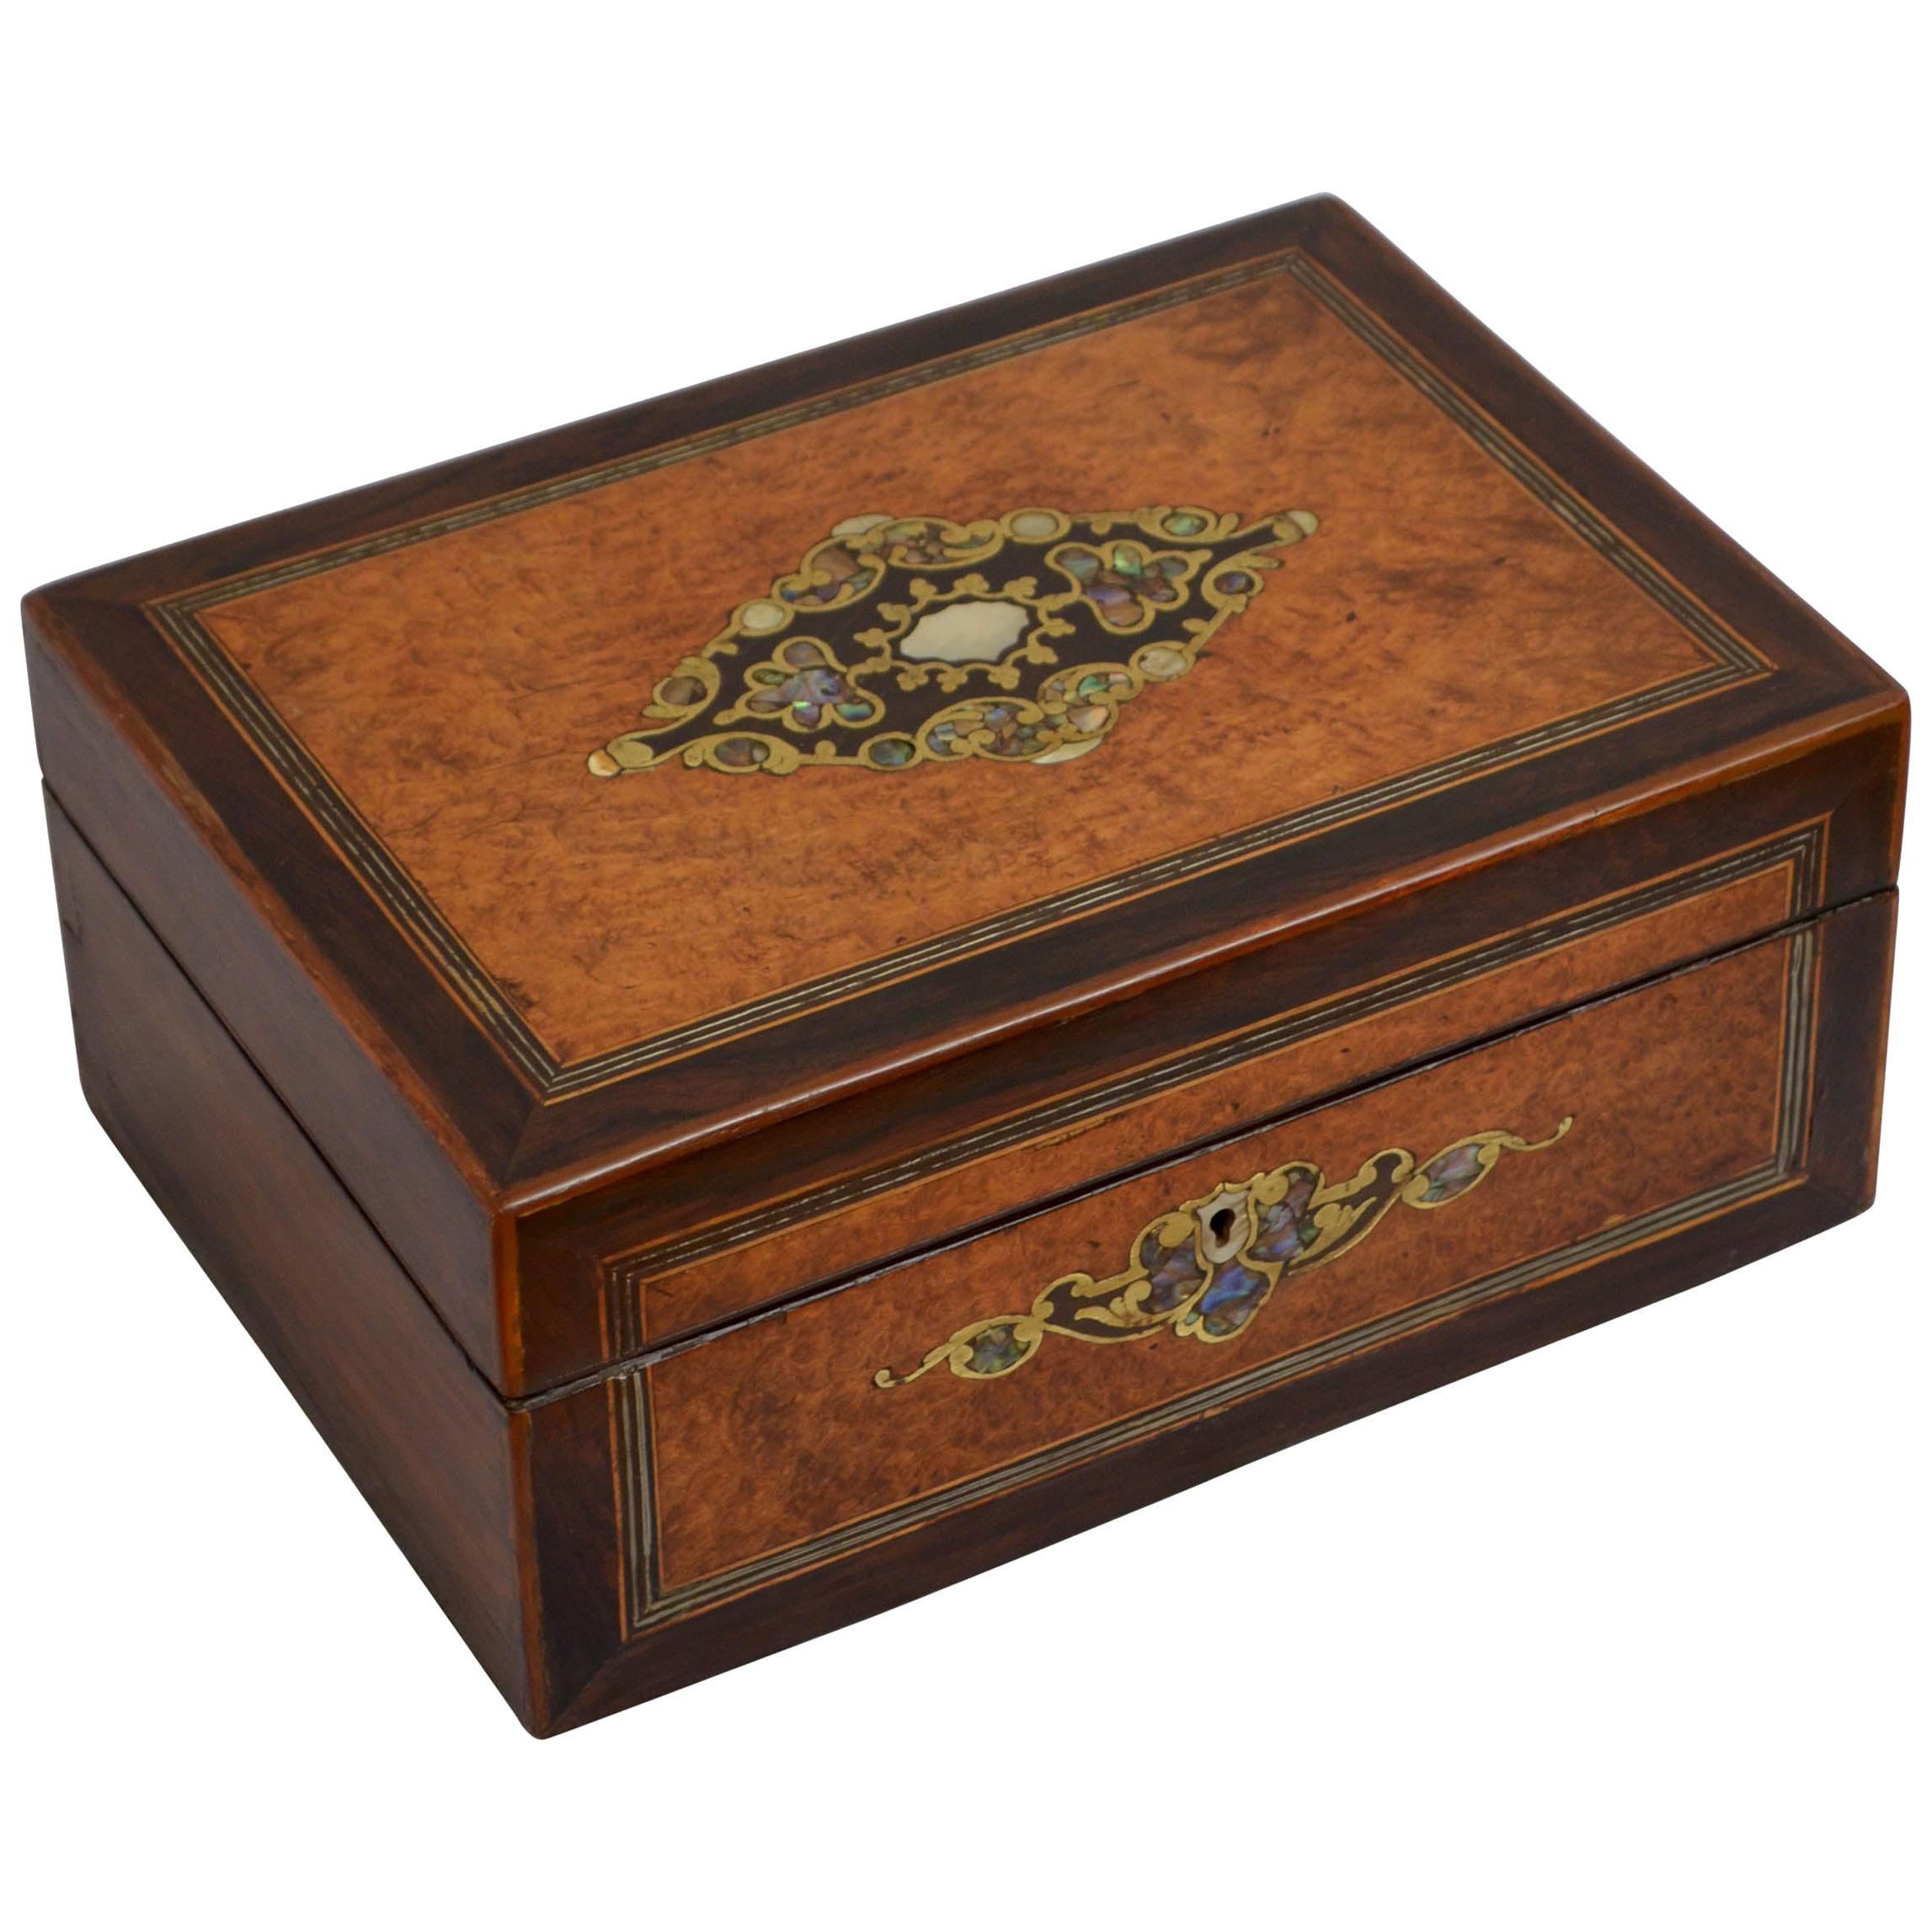 Magnificent Victorian Jewelry Box in Amboyna